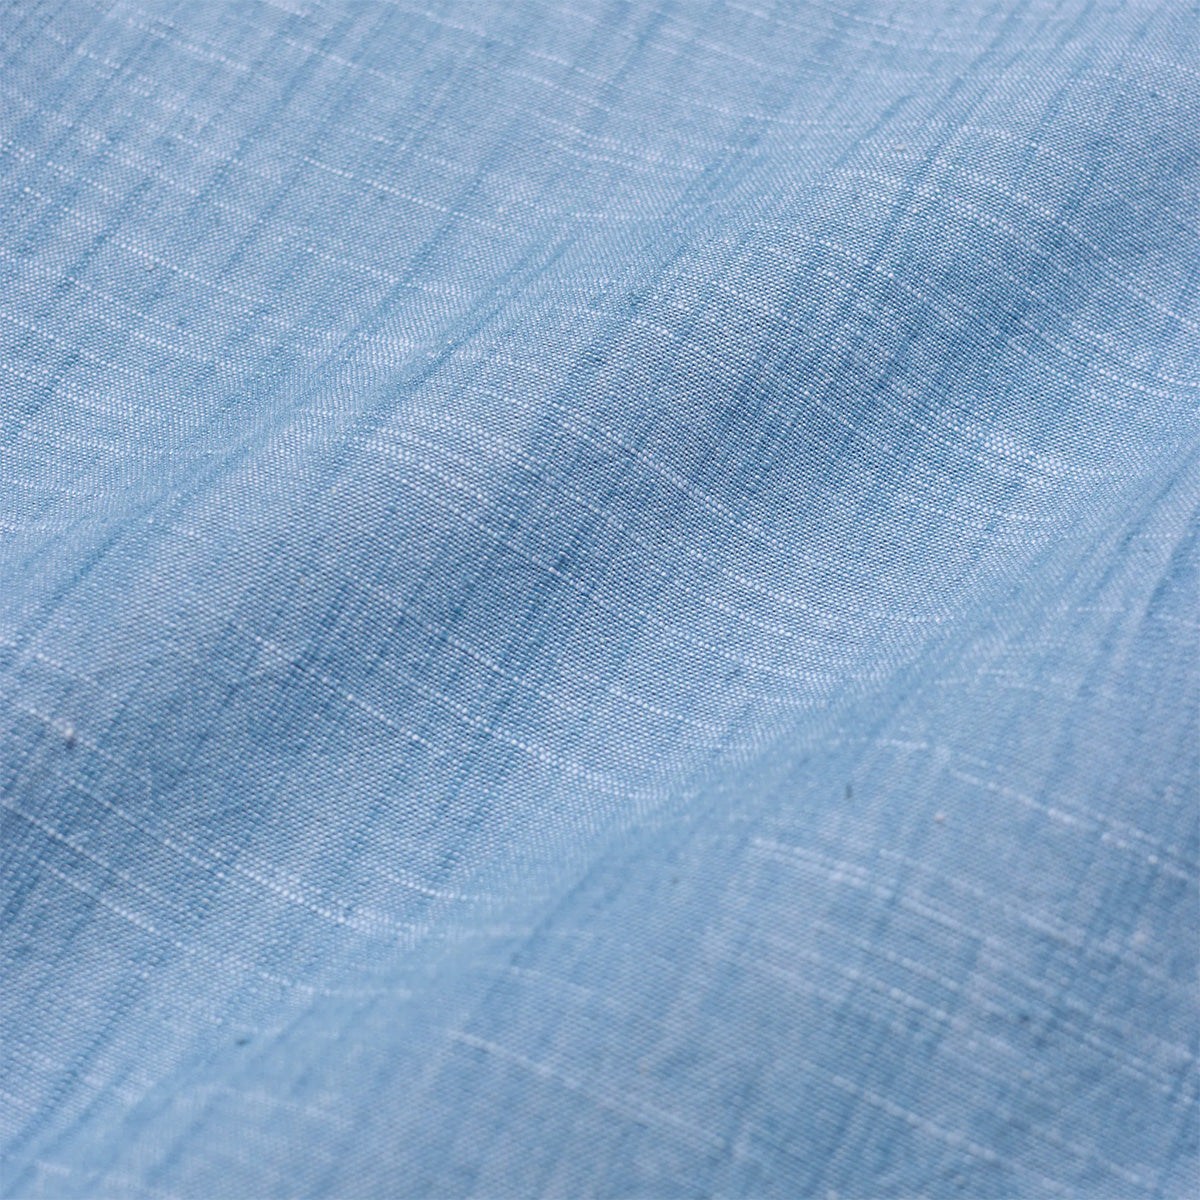 Costa Chambray Slub S/S Shirt - Allure Blue